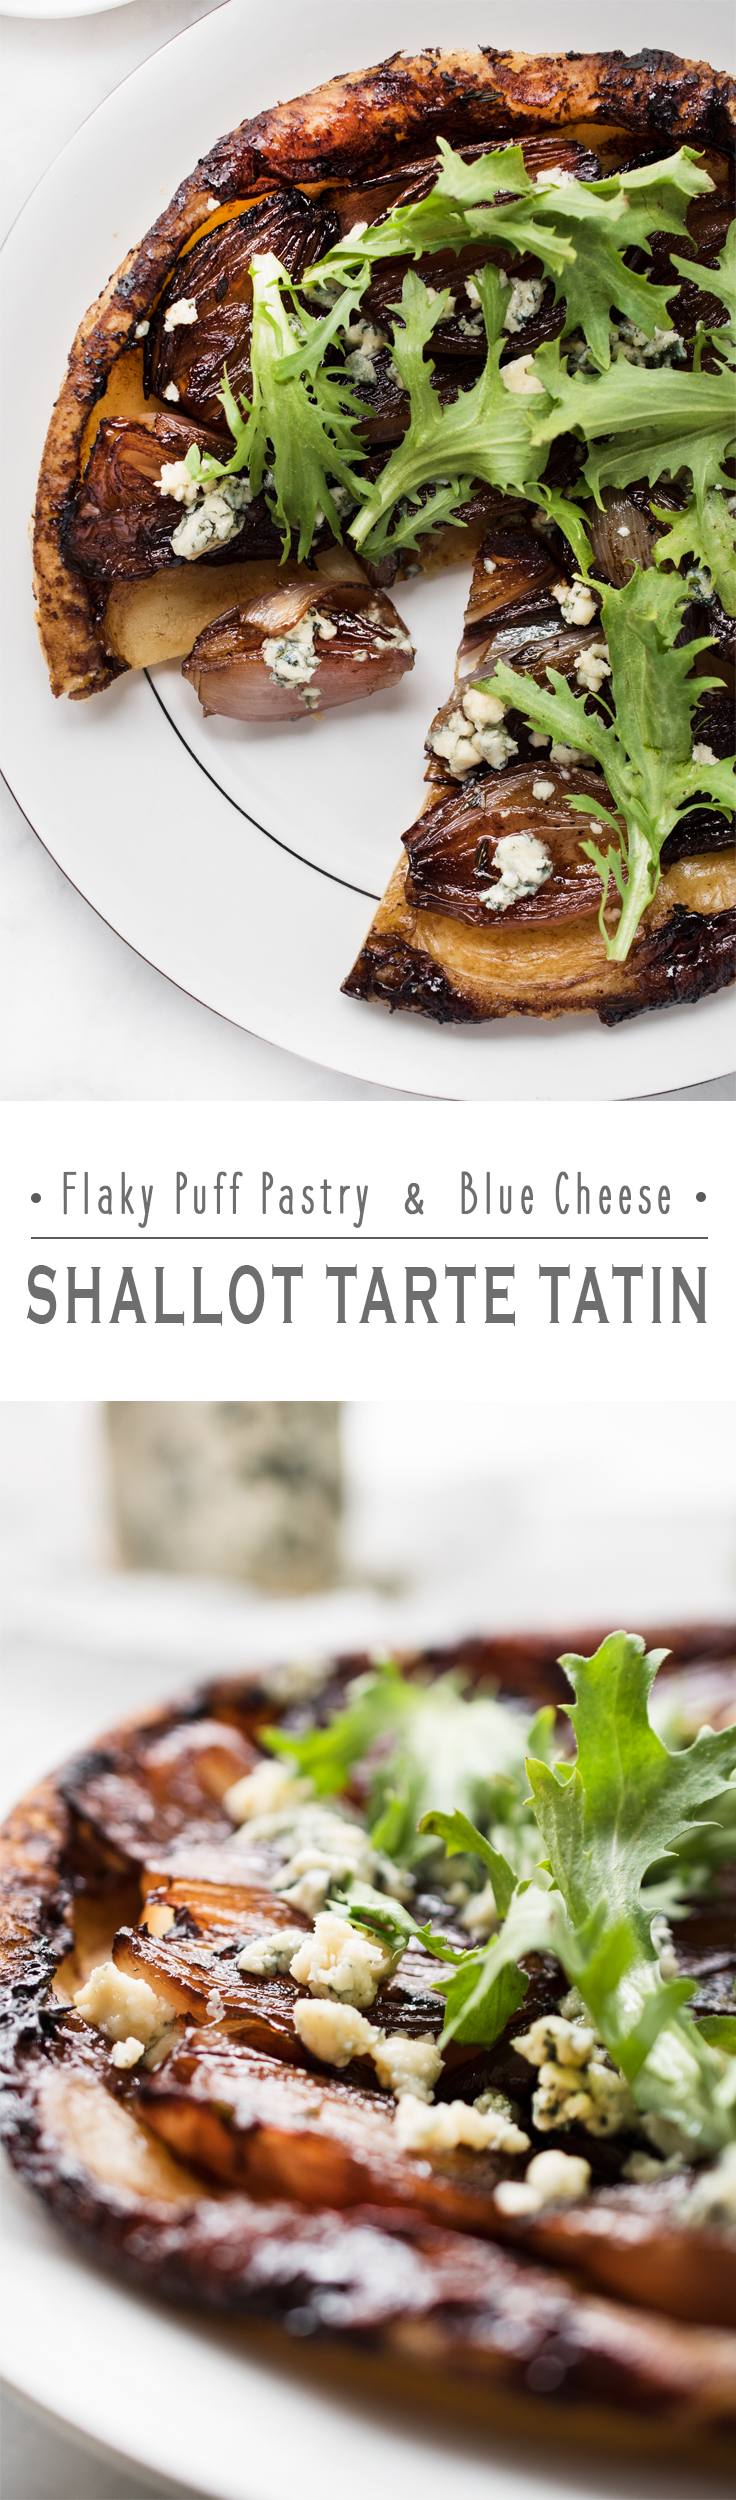 Flaky Puff Pastry and Blue Cheese - Shallot Tarte Tatin